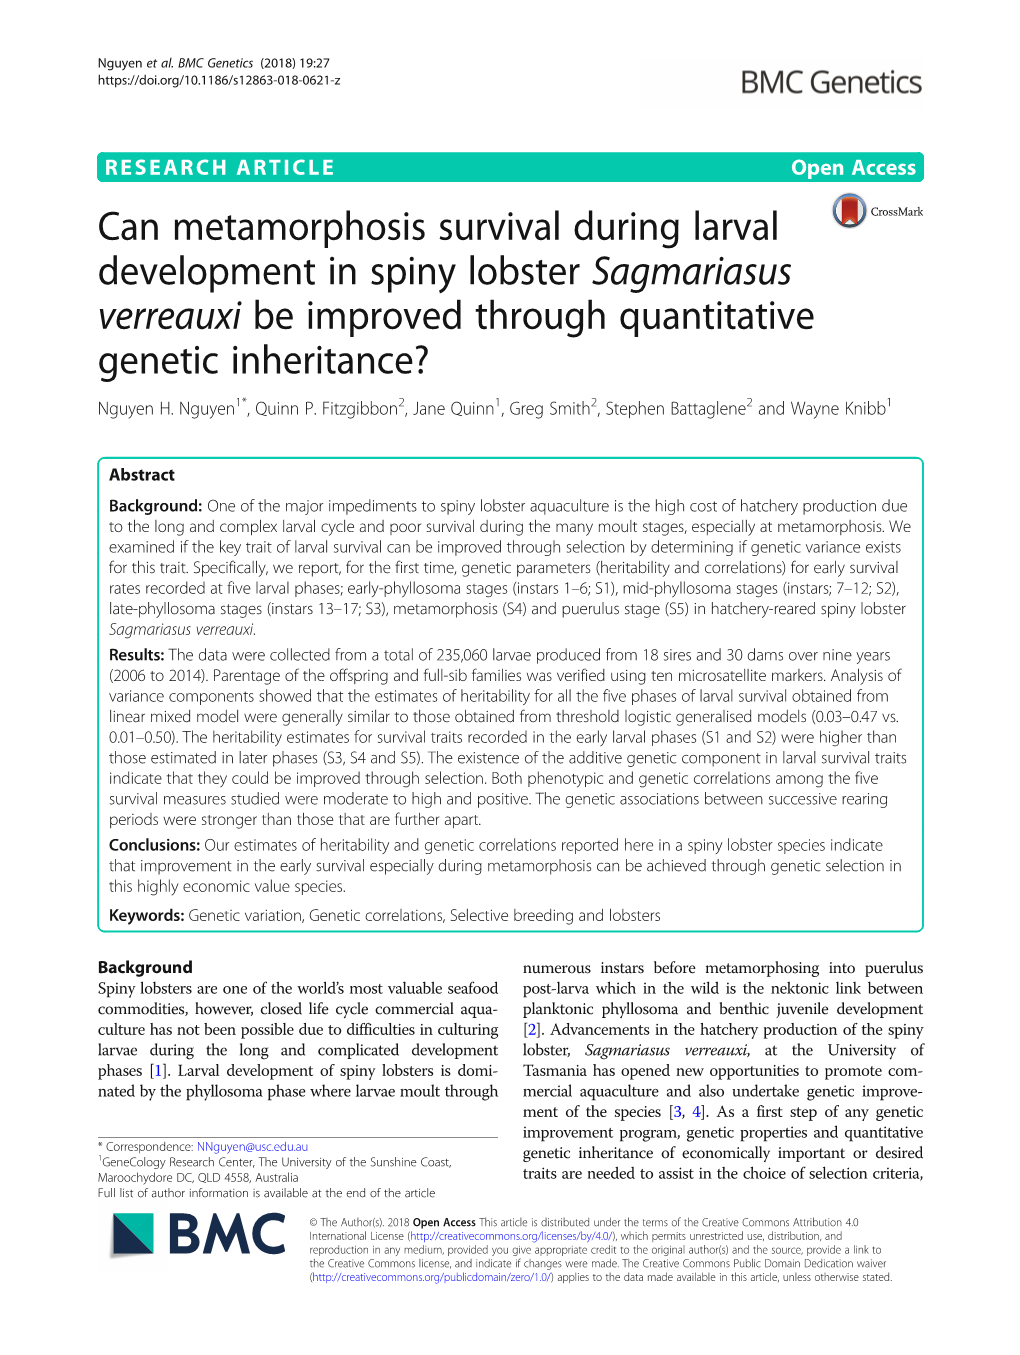 Can Metamorphosis Survival During Larval Development in Spiny Lobster Sagmariasus Verreauxi Be Improved Through Quantitative Genetic Inheritance? Nguyen H